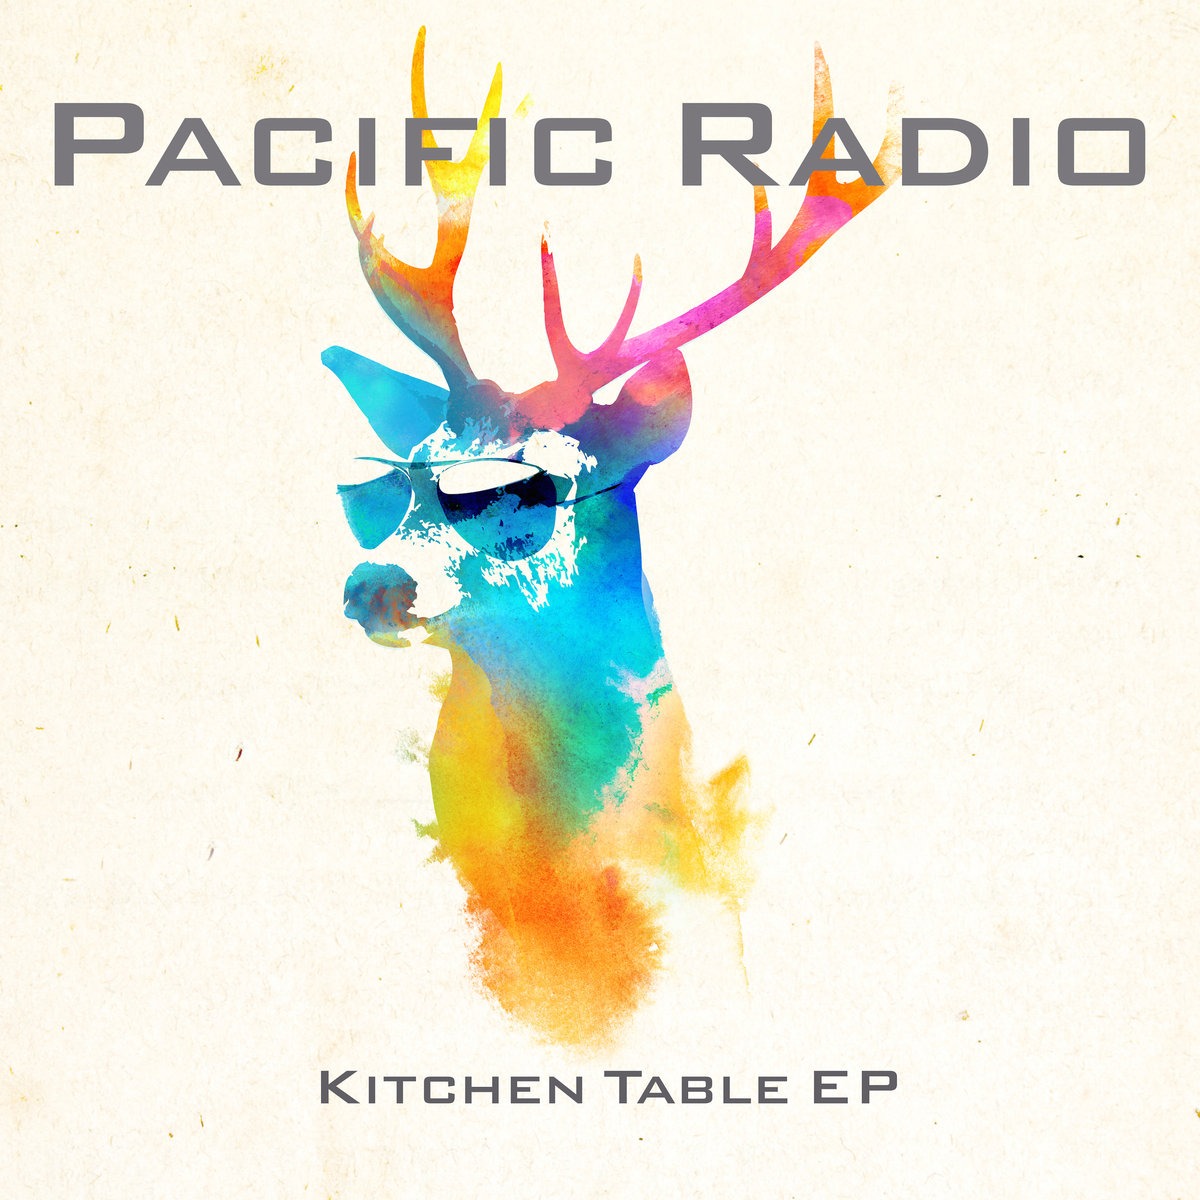 Pacific Radio's Kitchen Table